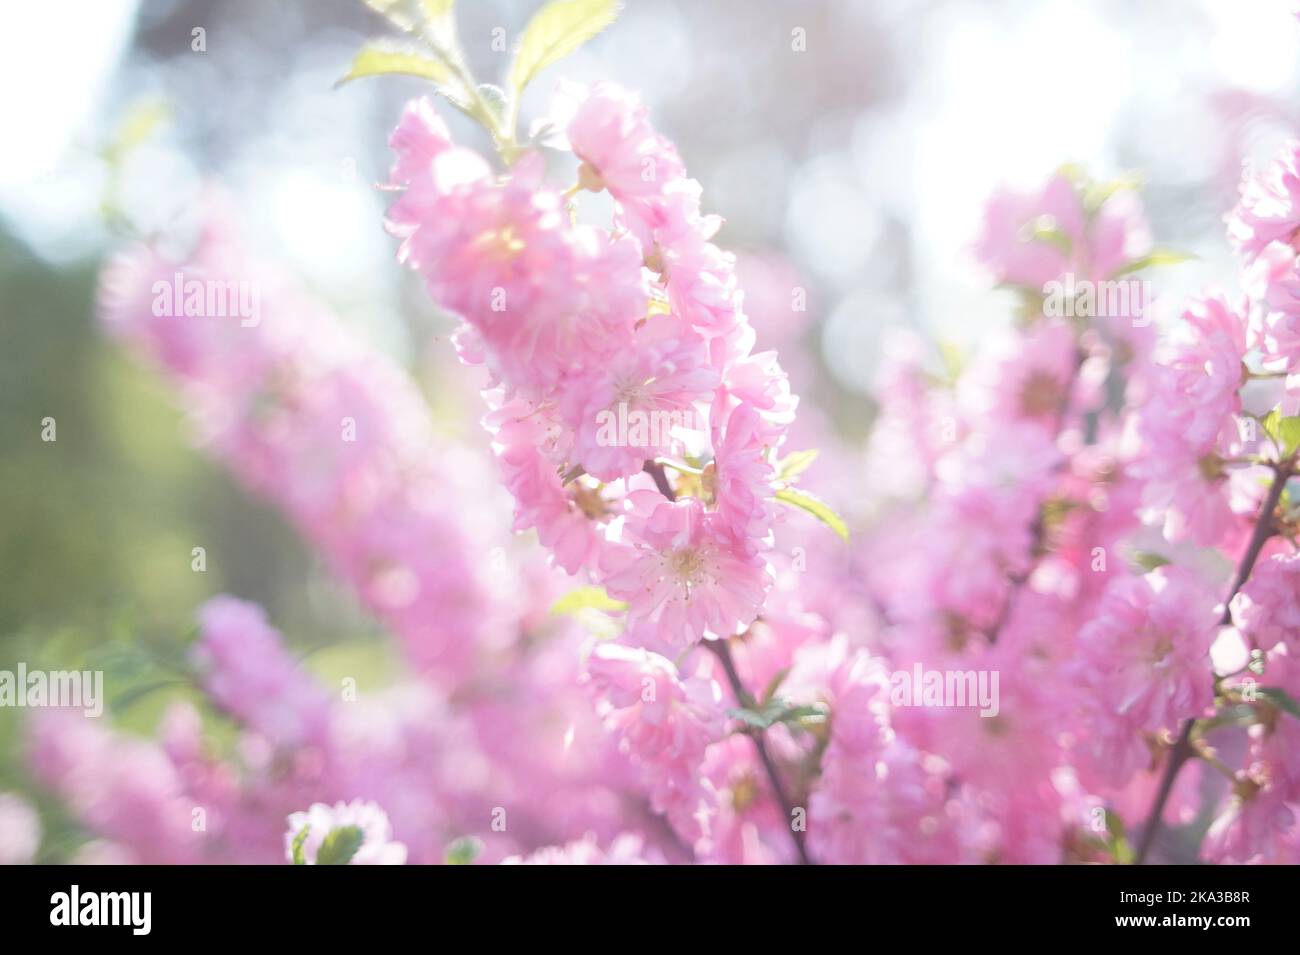 Rosafarbenes Photophon blühender Sakura-Zweige Stockfoto